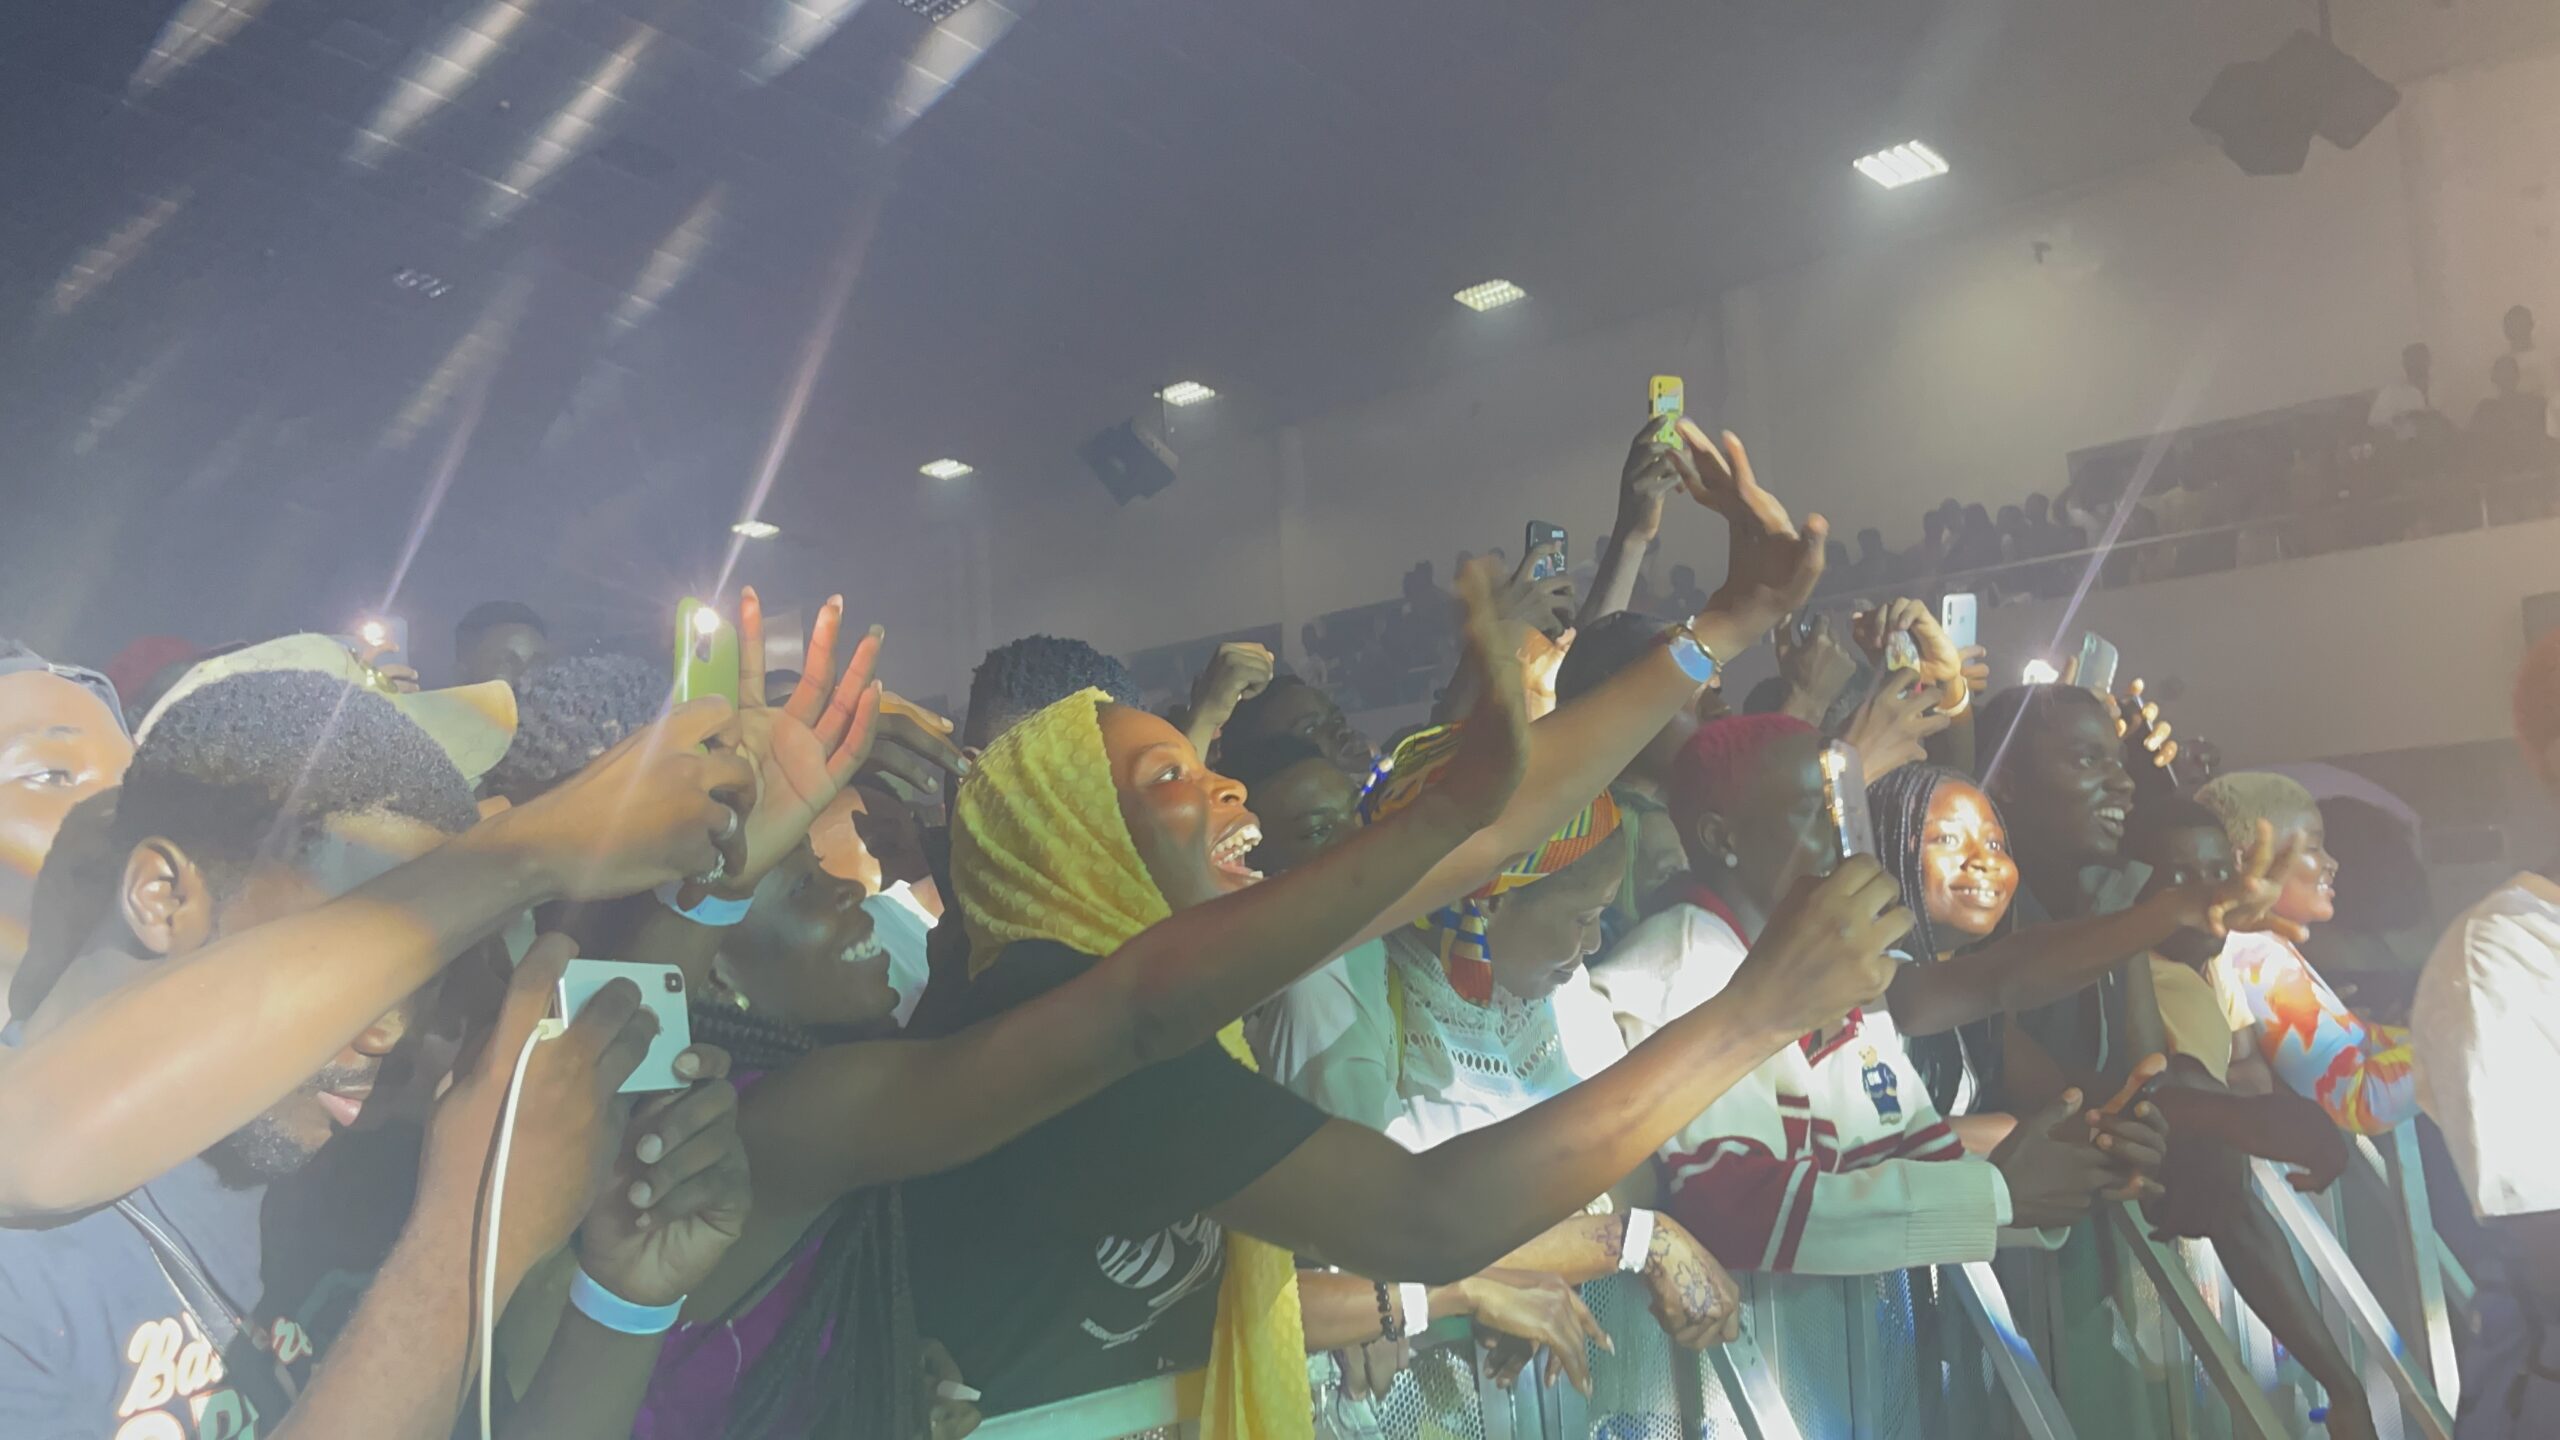 Music lovers at the concert of Bella Shmurda in Ibadan